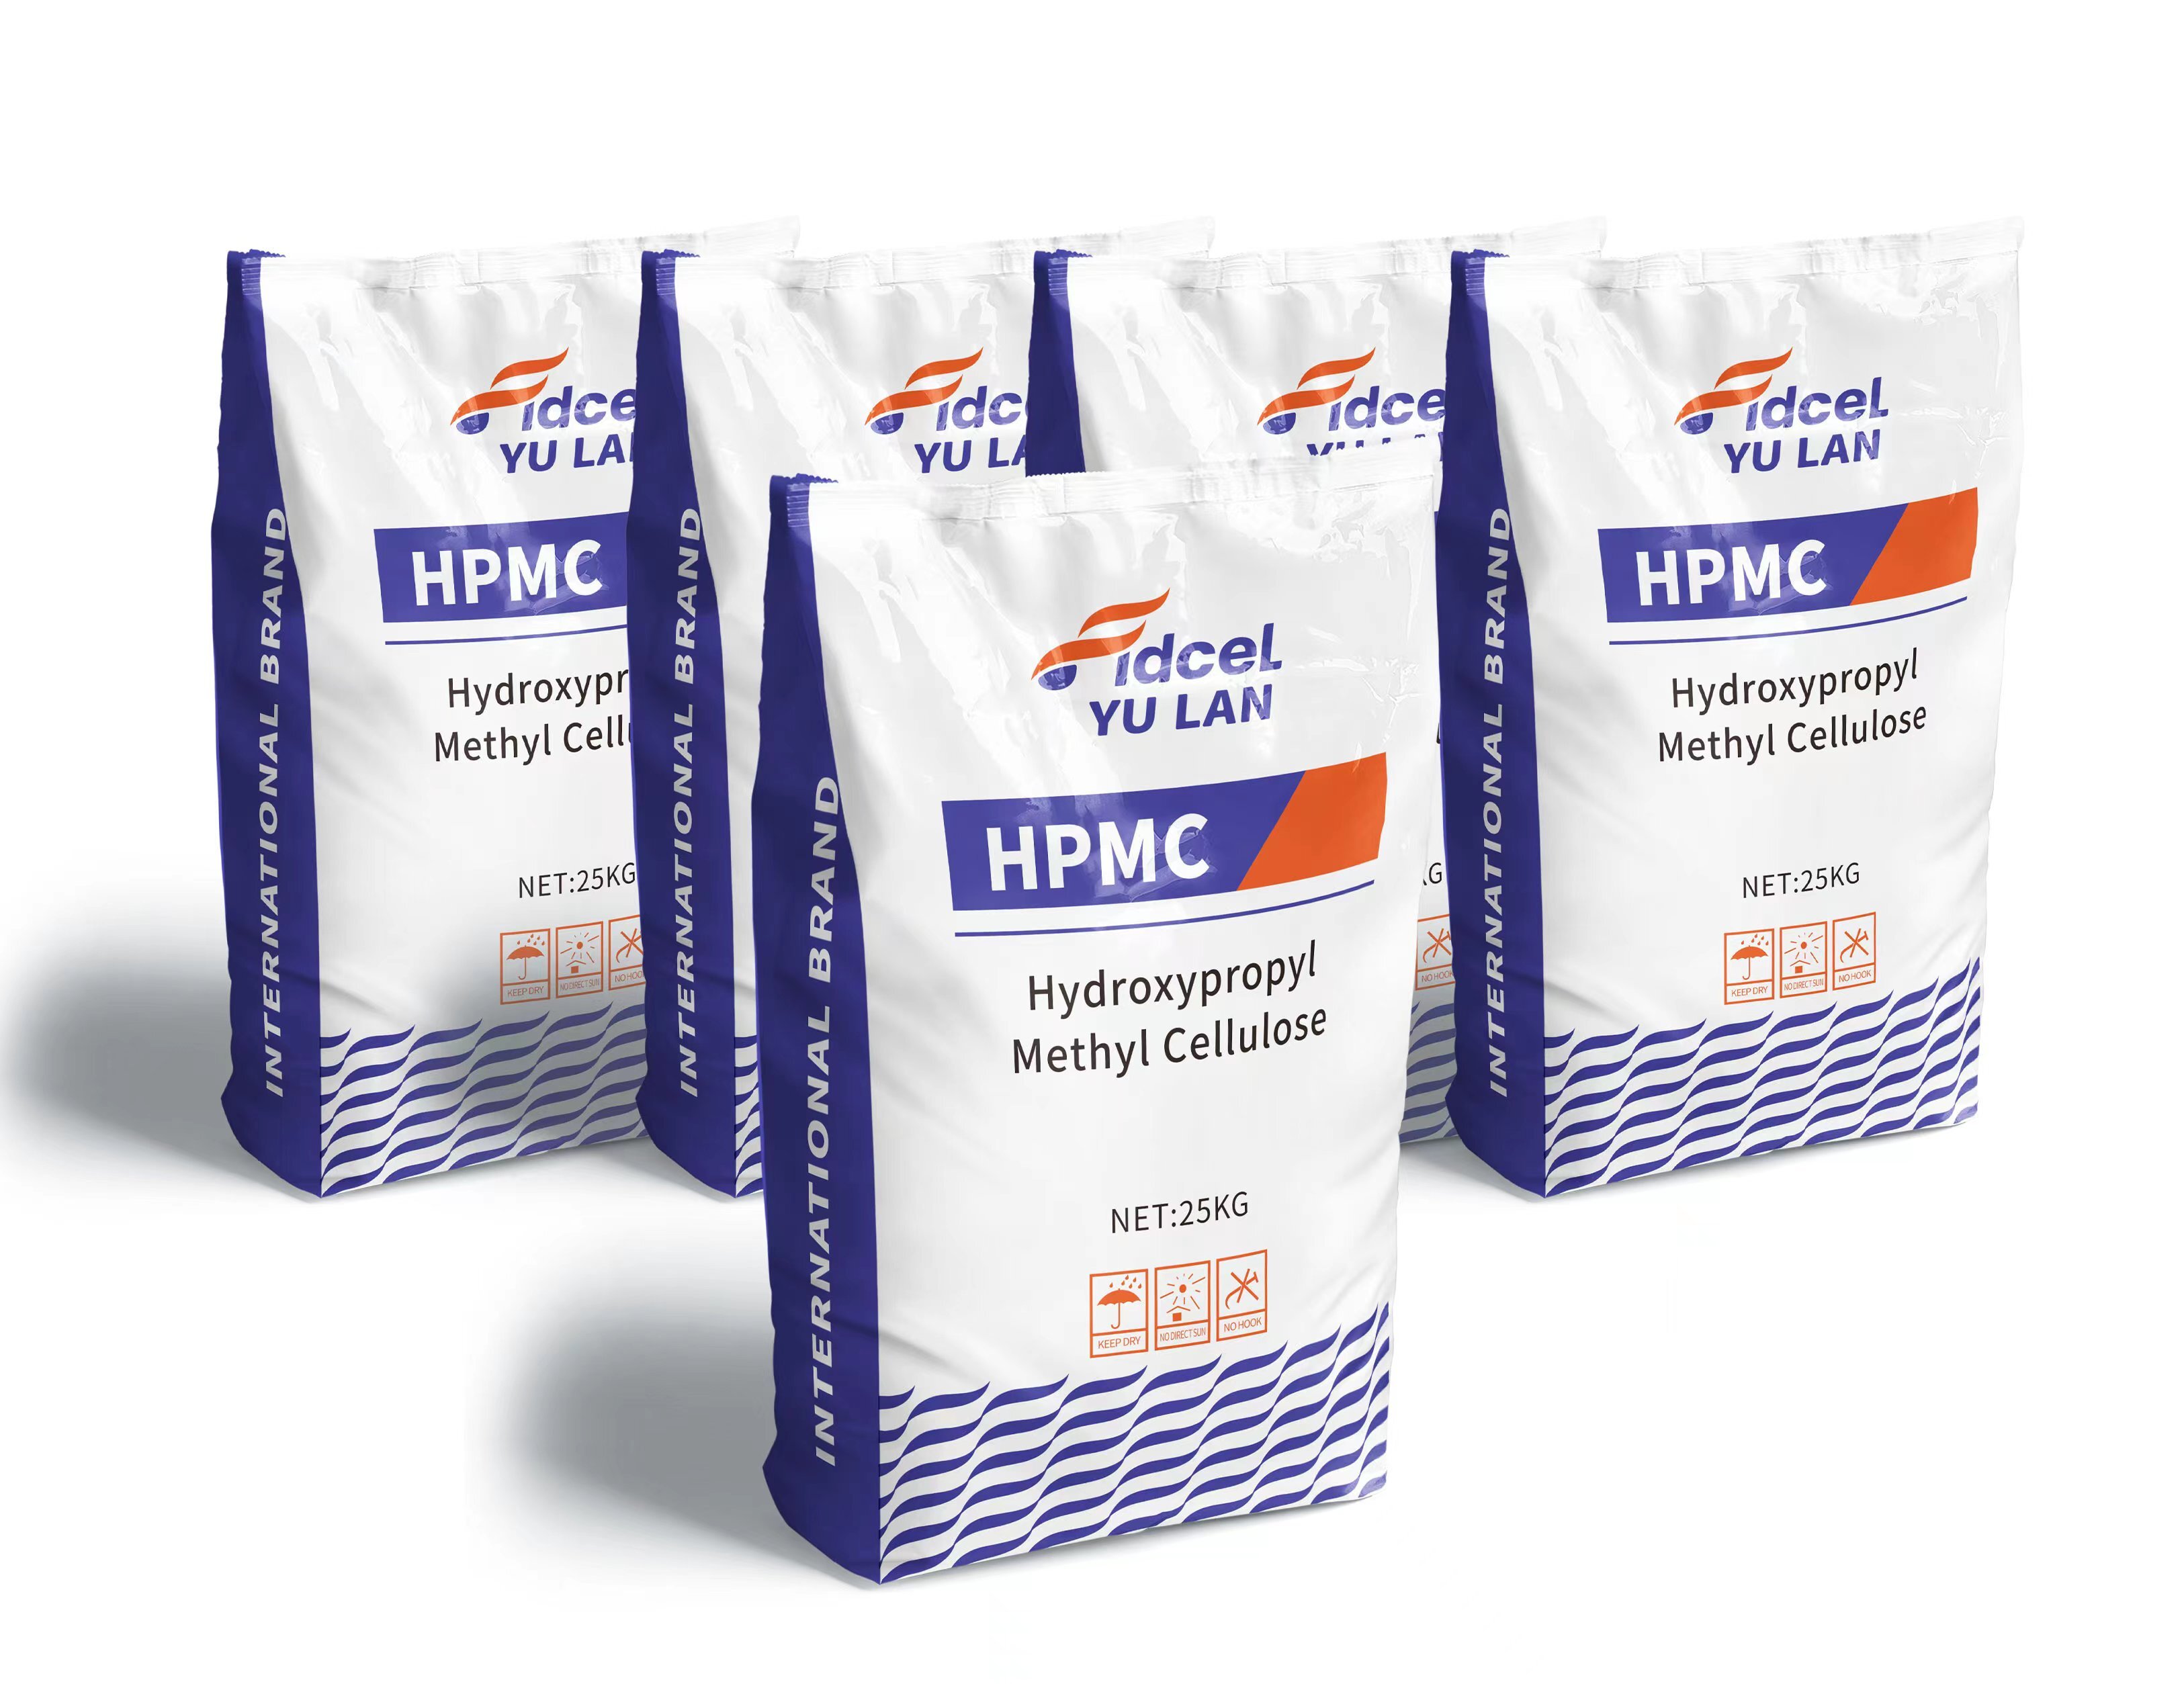 Best Quality Extra High Viscosity 200000 mpas Industrial Grade HPMC Hydroxypropyl Methyl Cellulose